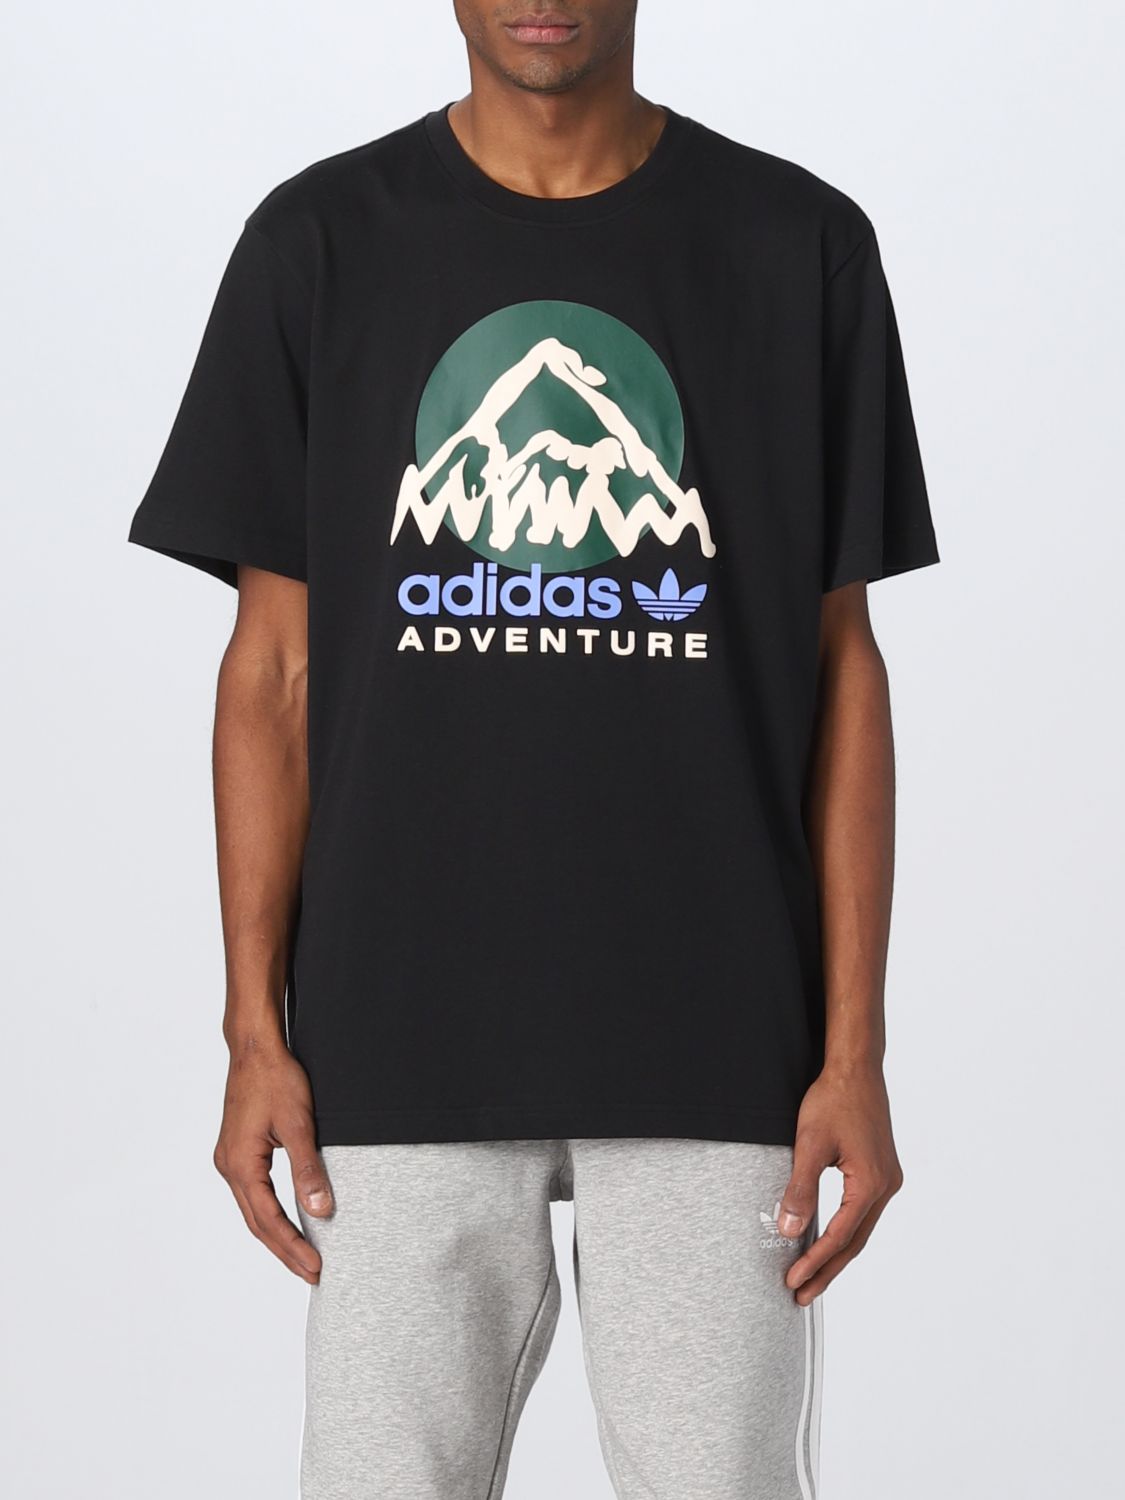 atomair Daar Snooze ADIDAS ORIGINALS: t-shirt for man - Black | Adidas Originals t-shirt IC2361  online on GIGLIO.COM